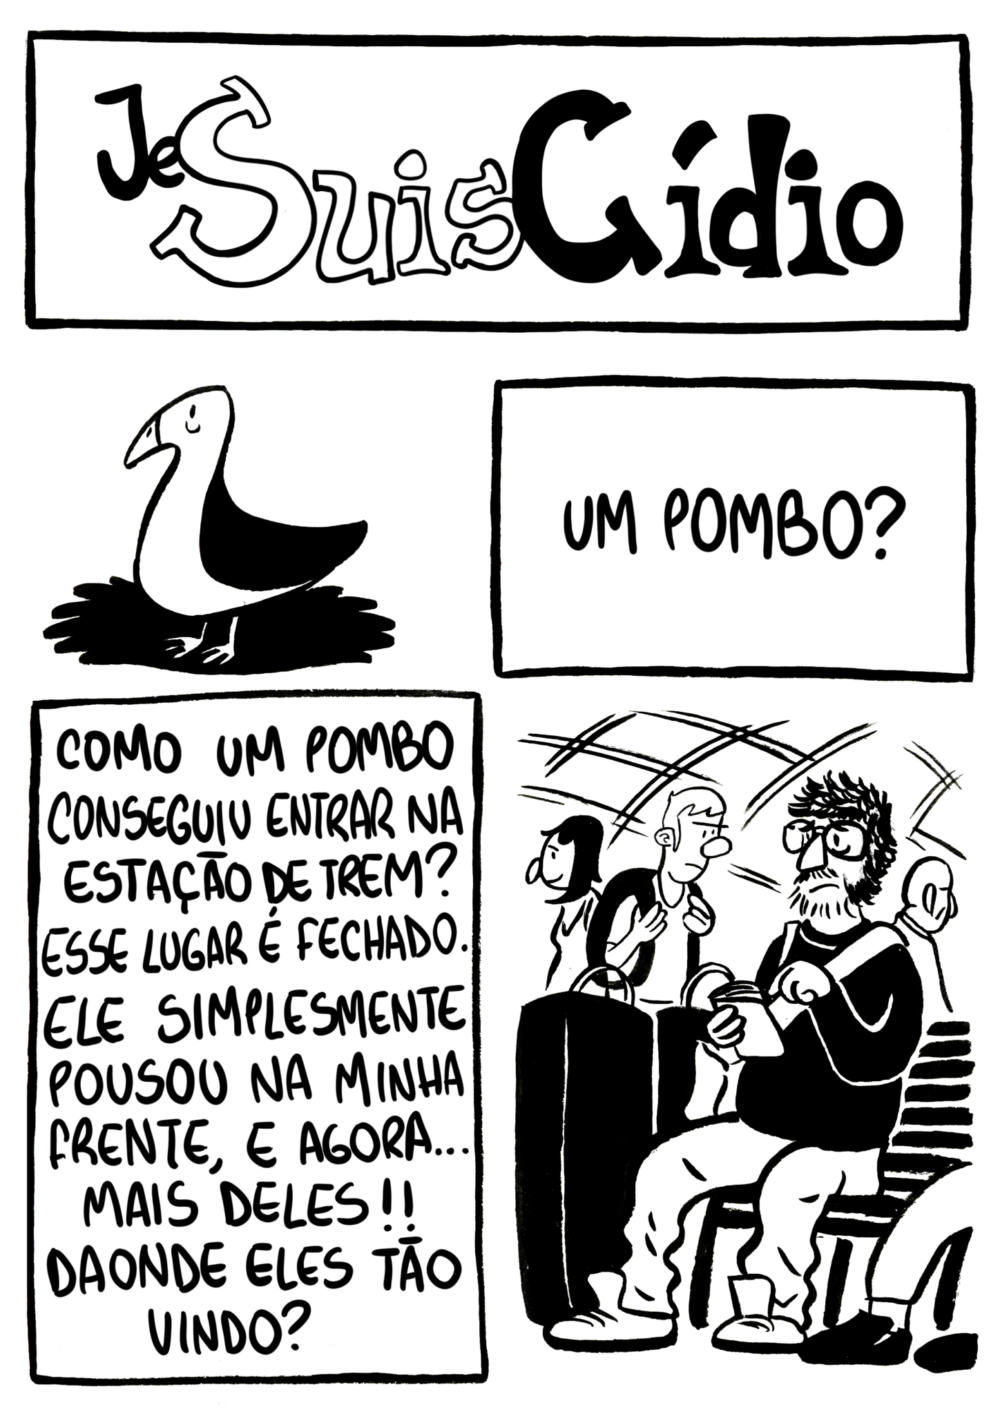 Je Suis Cídio #1, por João B. Godoi